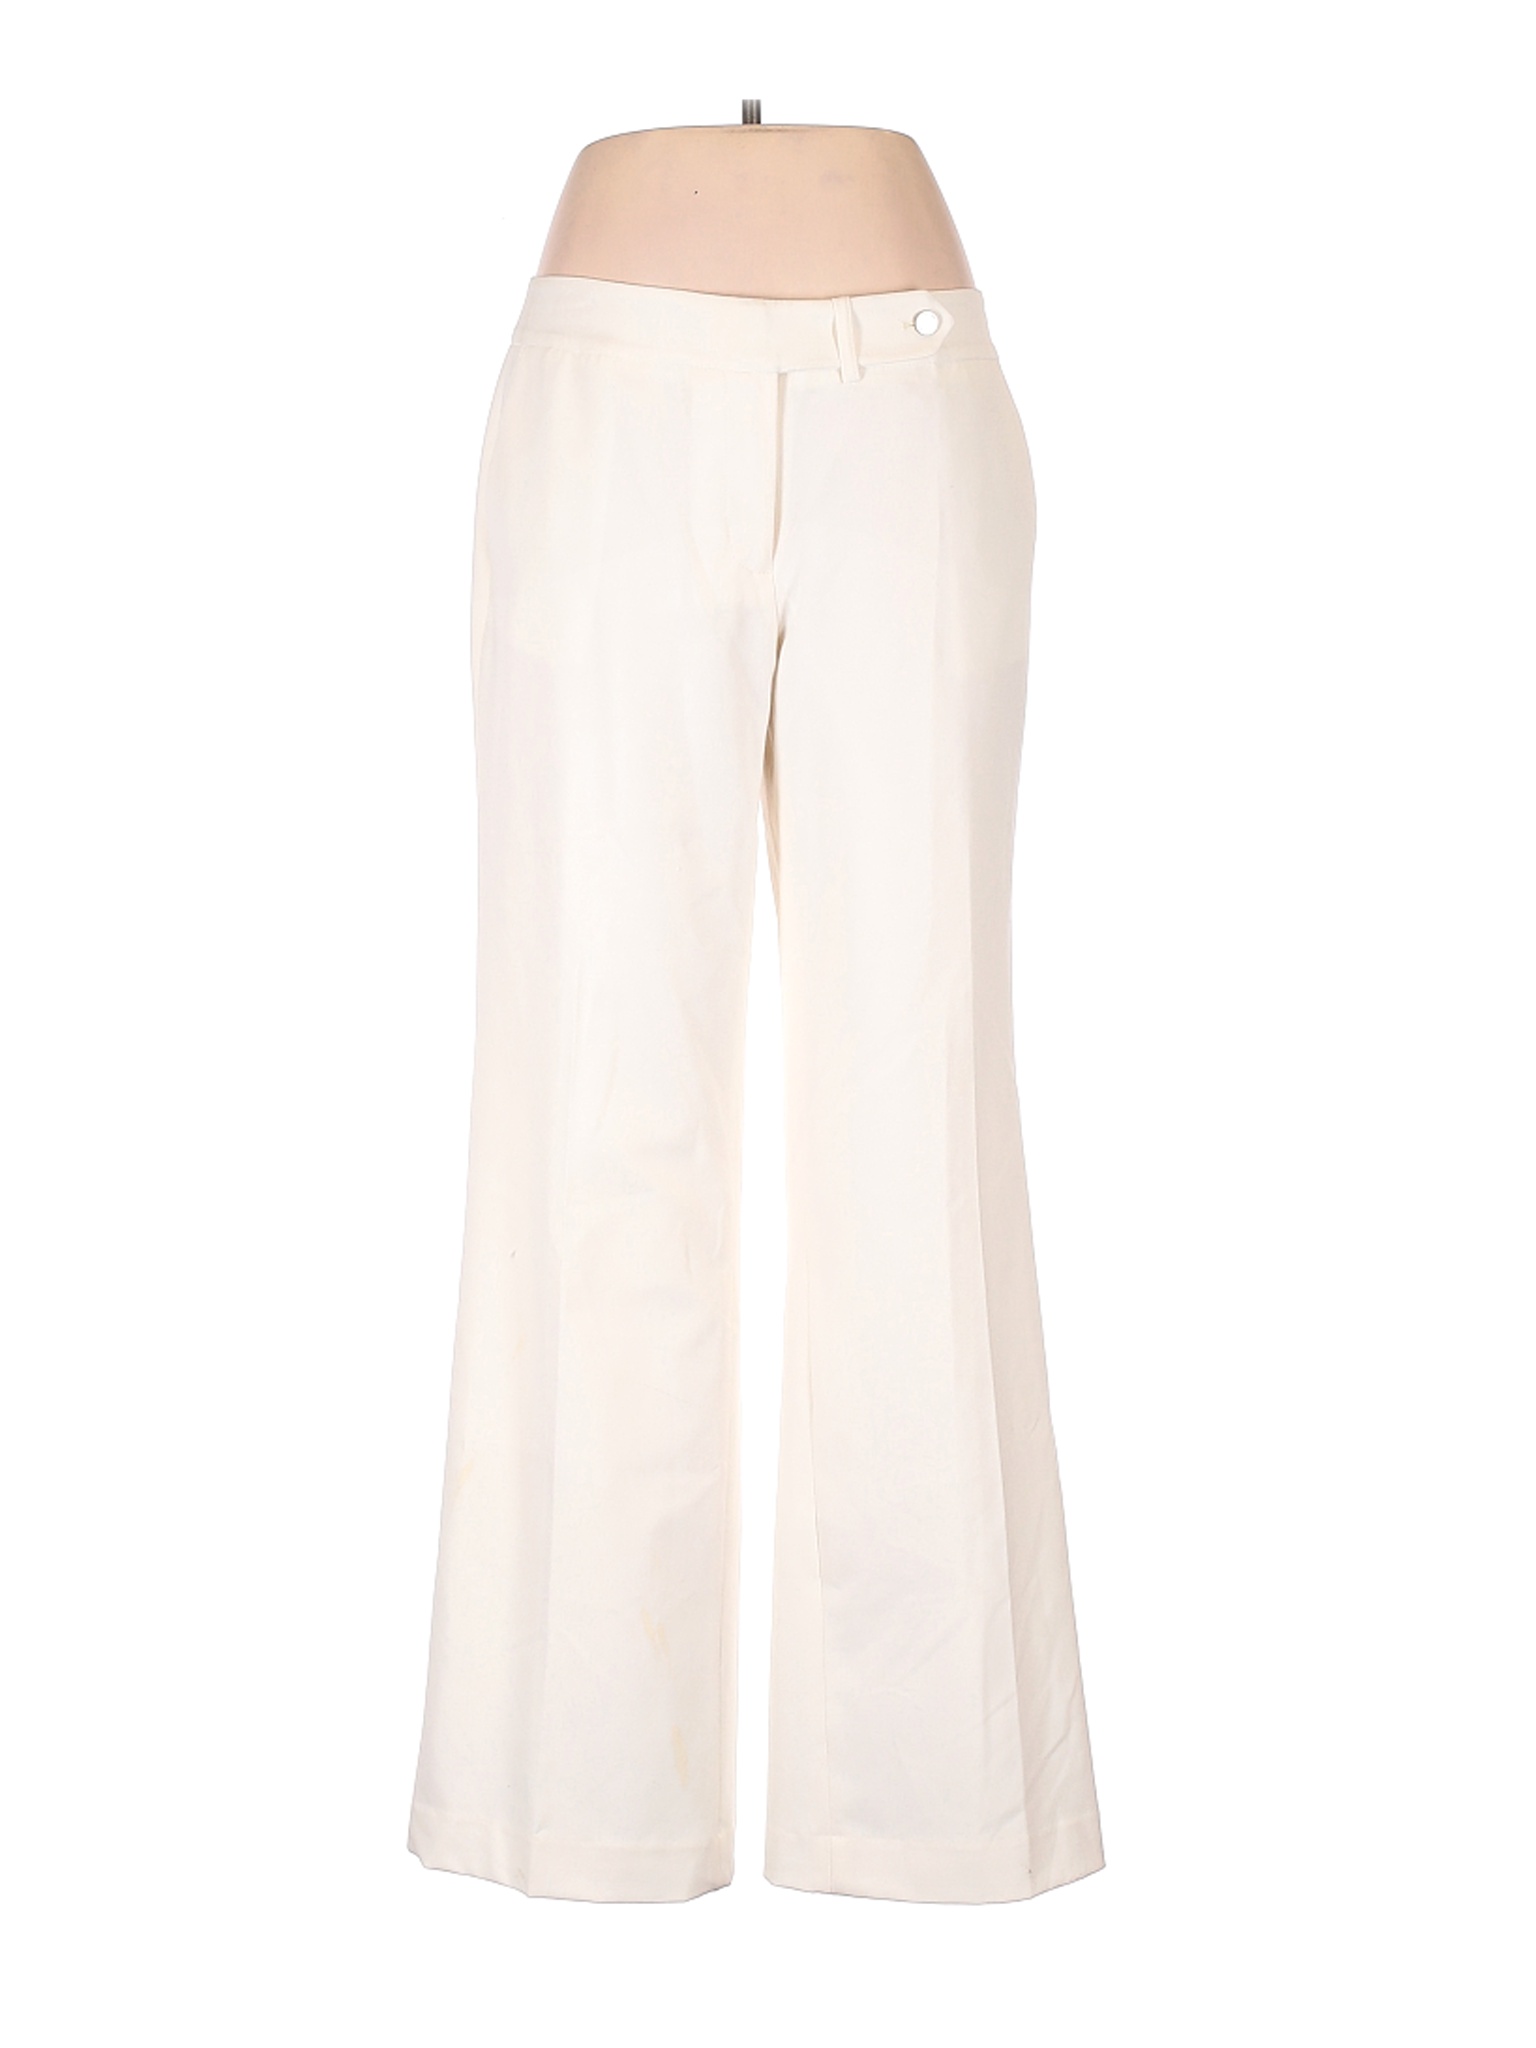 Calvin Klein Women Ivory Dress Pants 10 | eBay